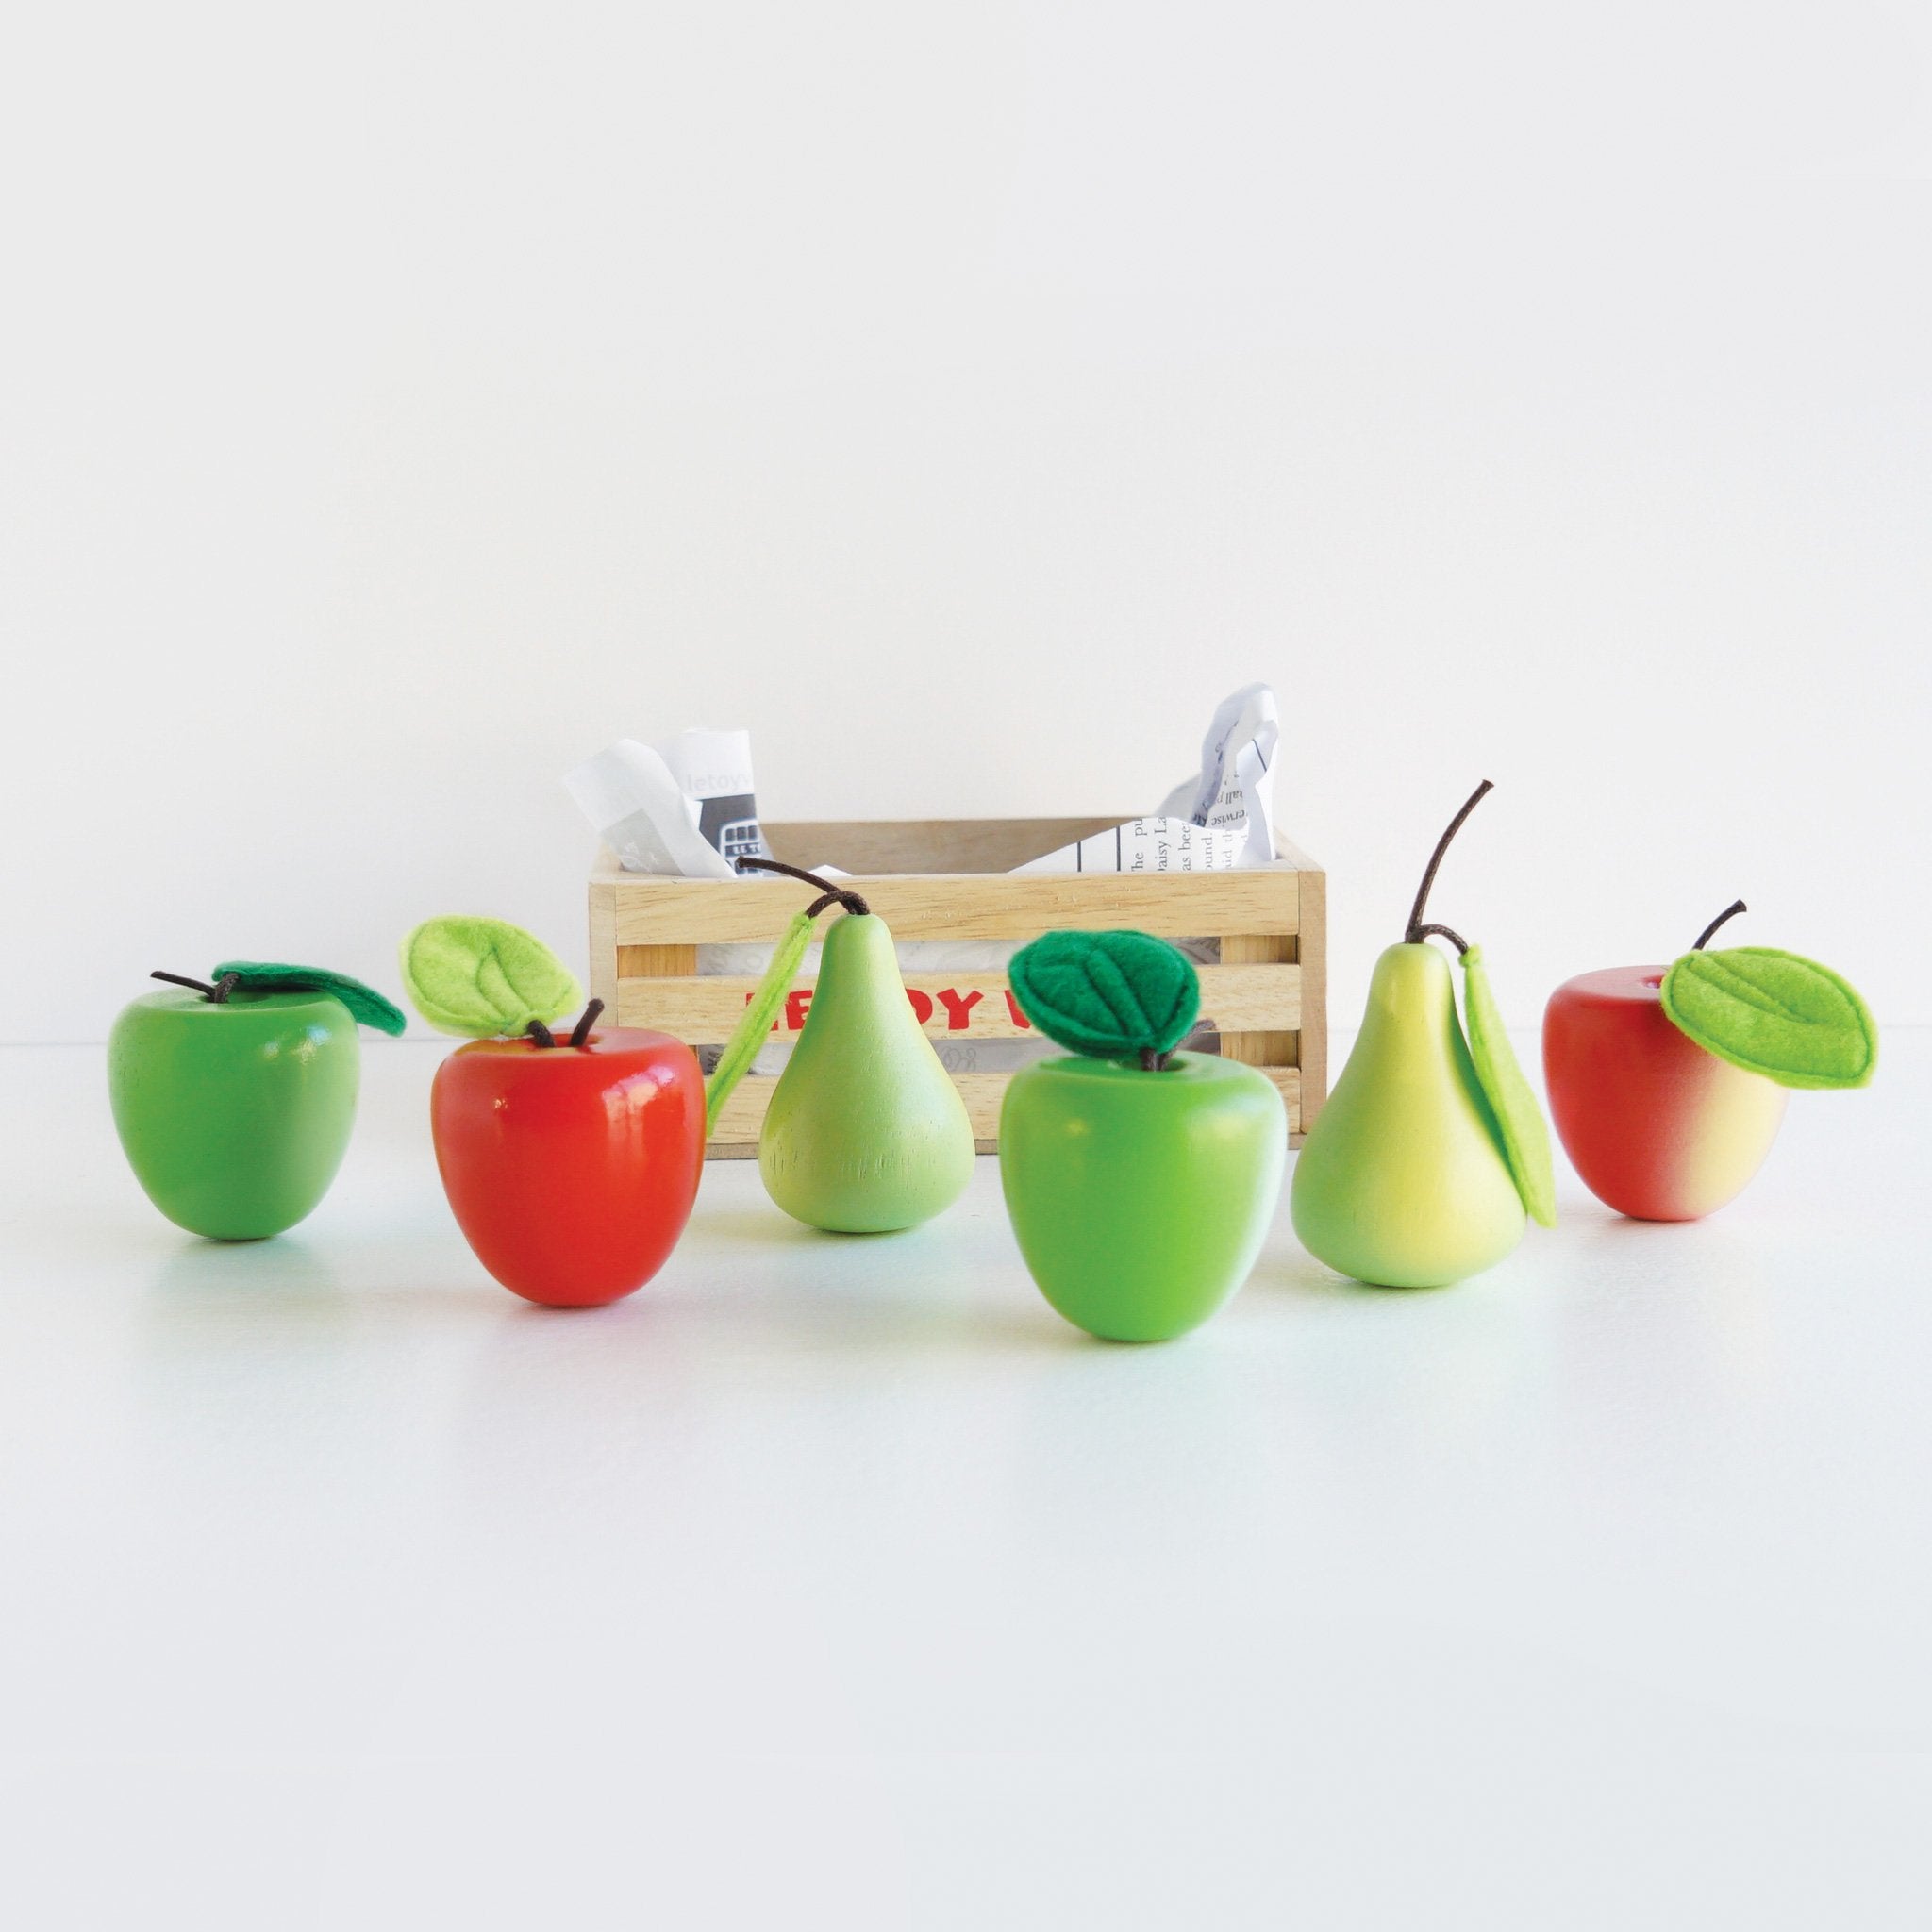 Le Toy Van Apples & Pears Market Crate